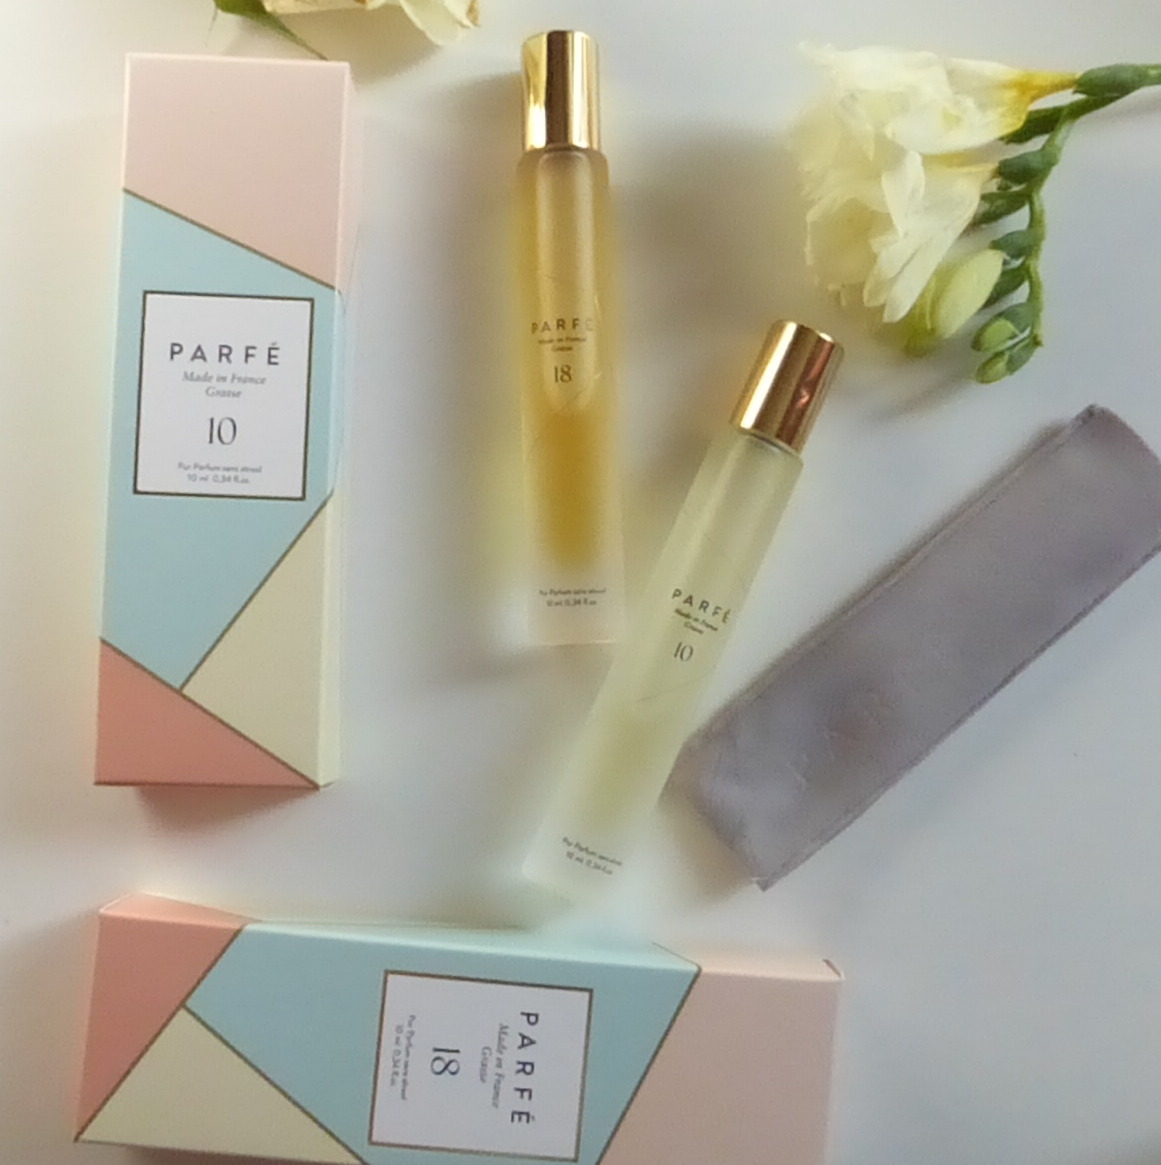 Parfe Pur Parfum #10 & 18 Beauty Blog by Svetlana Russkih